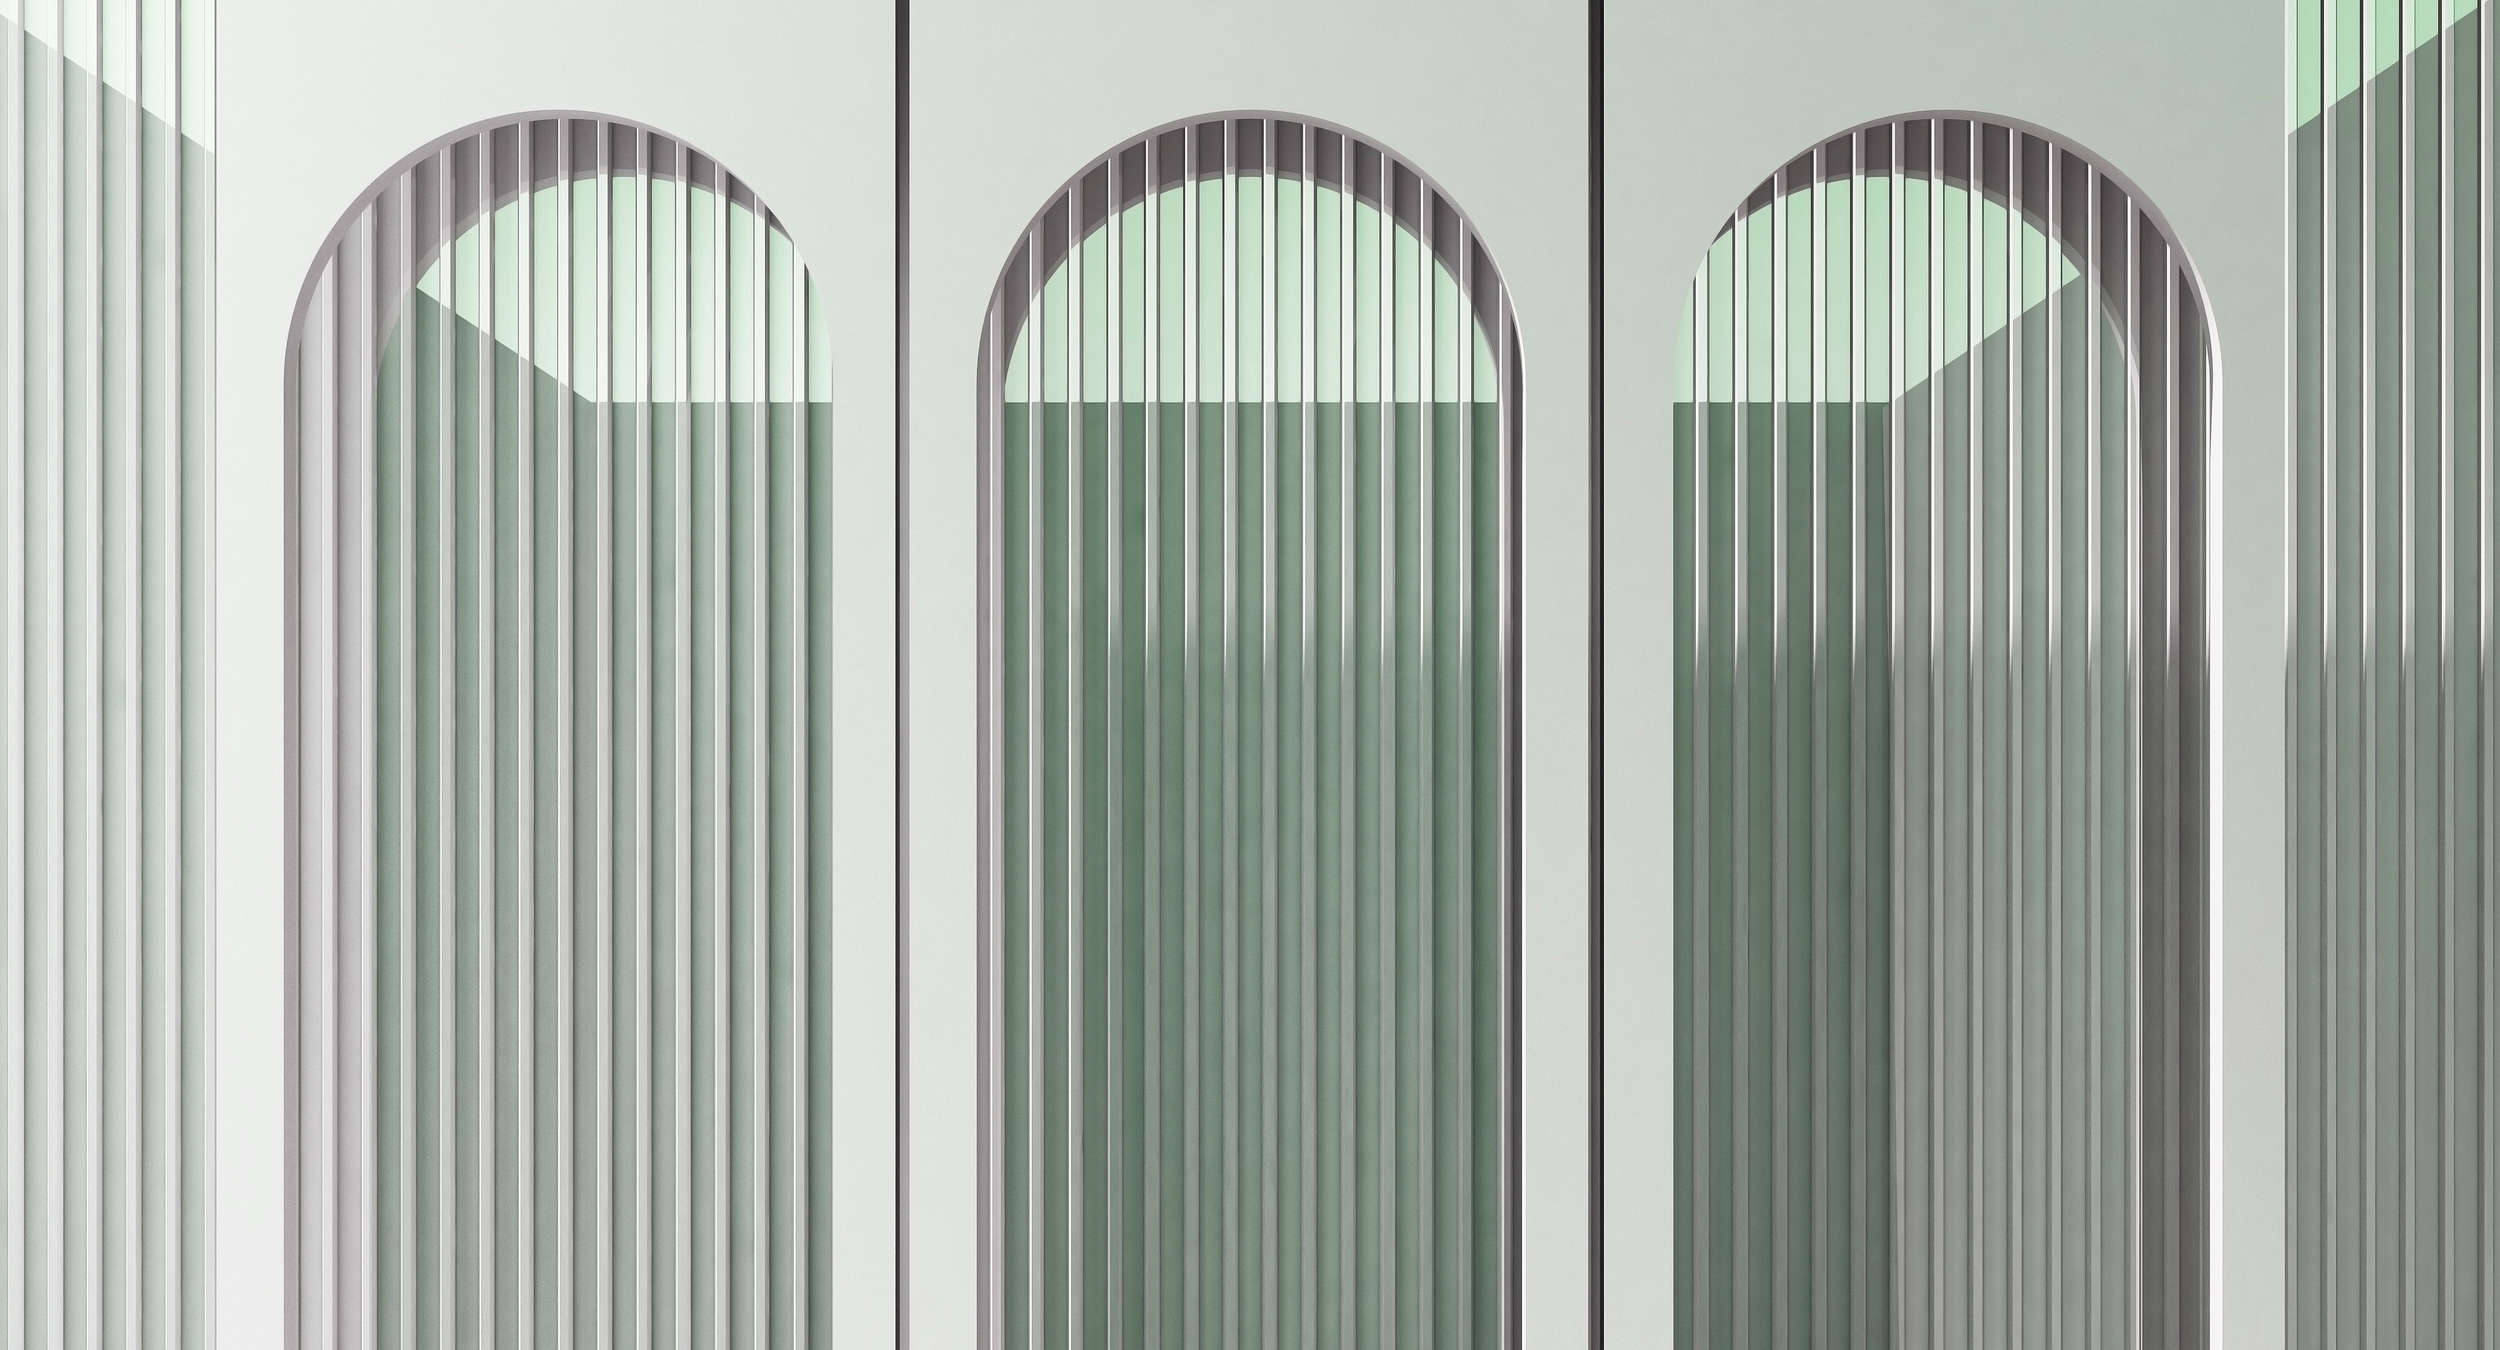             Escape Room 3 - Architectural wallpaper modern views grey & green
        